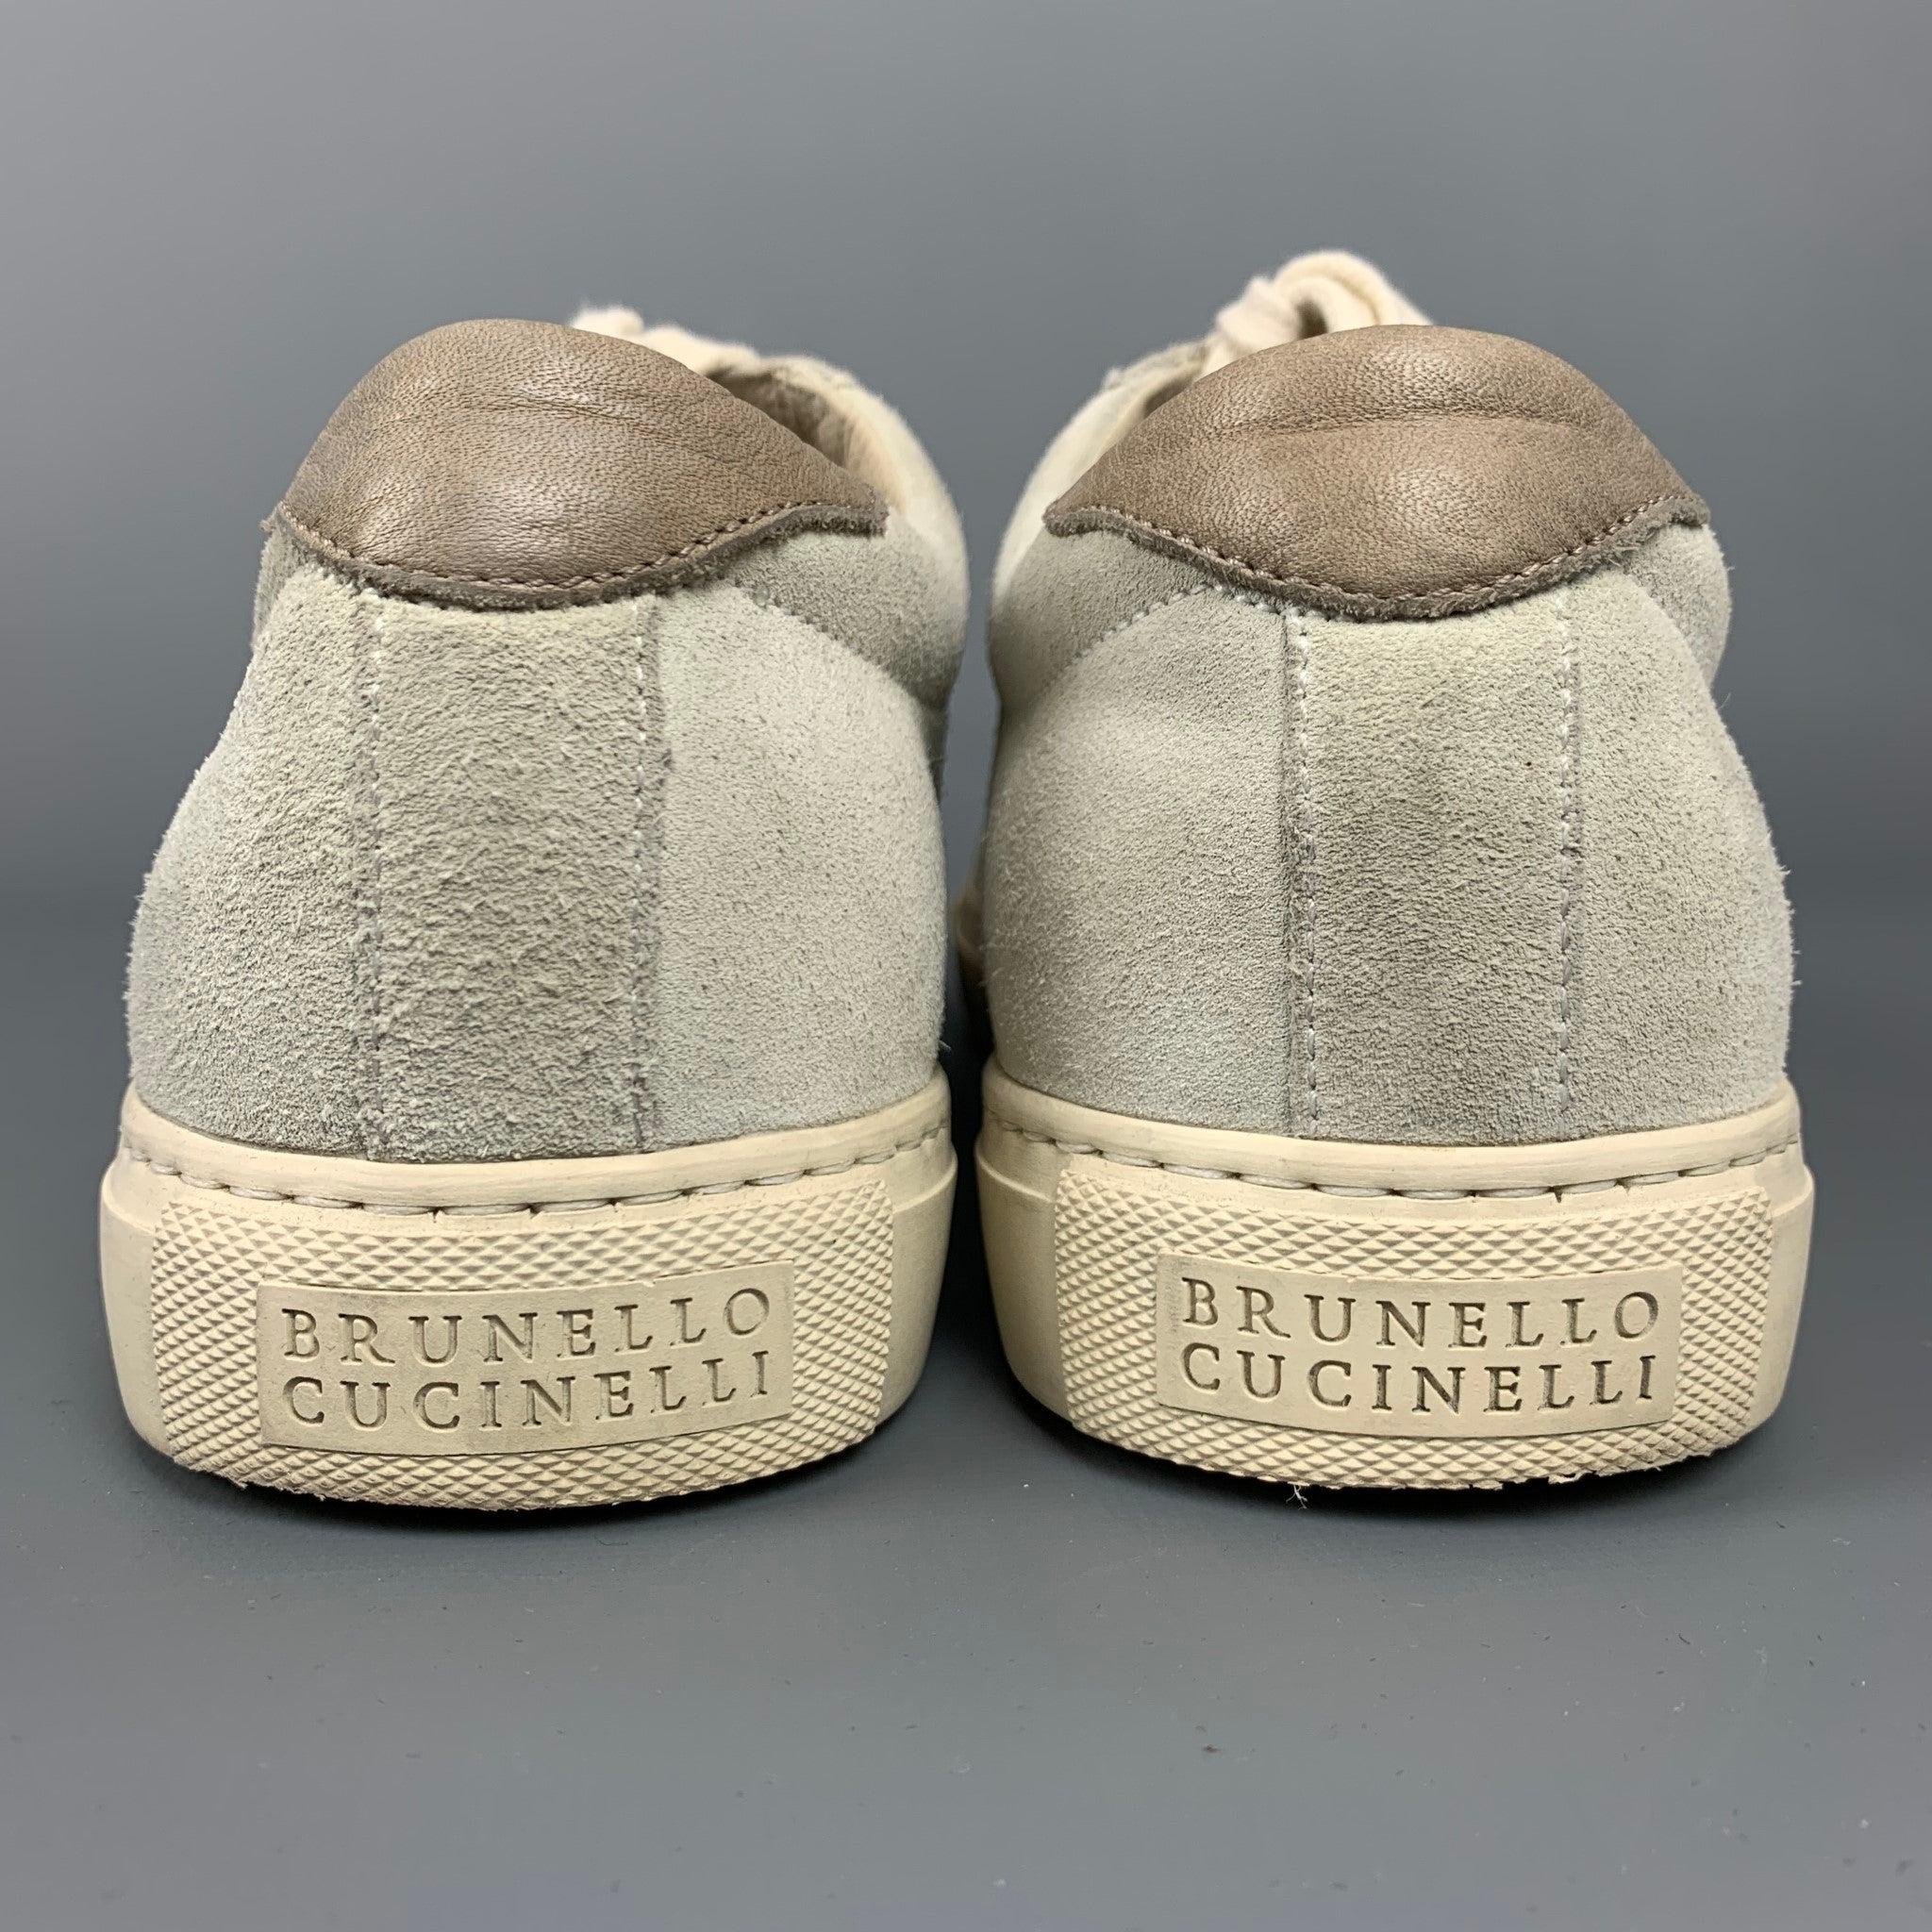 BRUNELLO CUCINELLI Size 7.5 Sea Foam Suede Sneakers For Sale 1